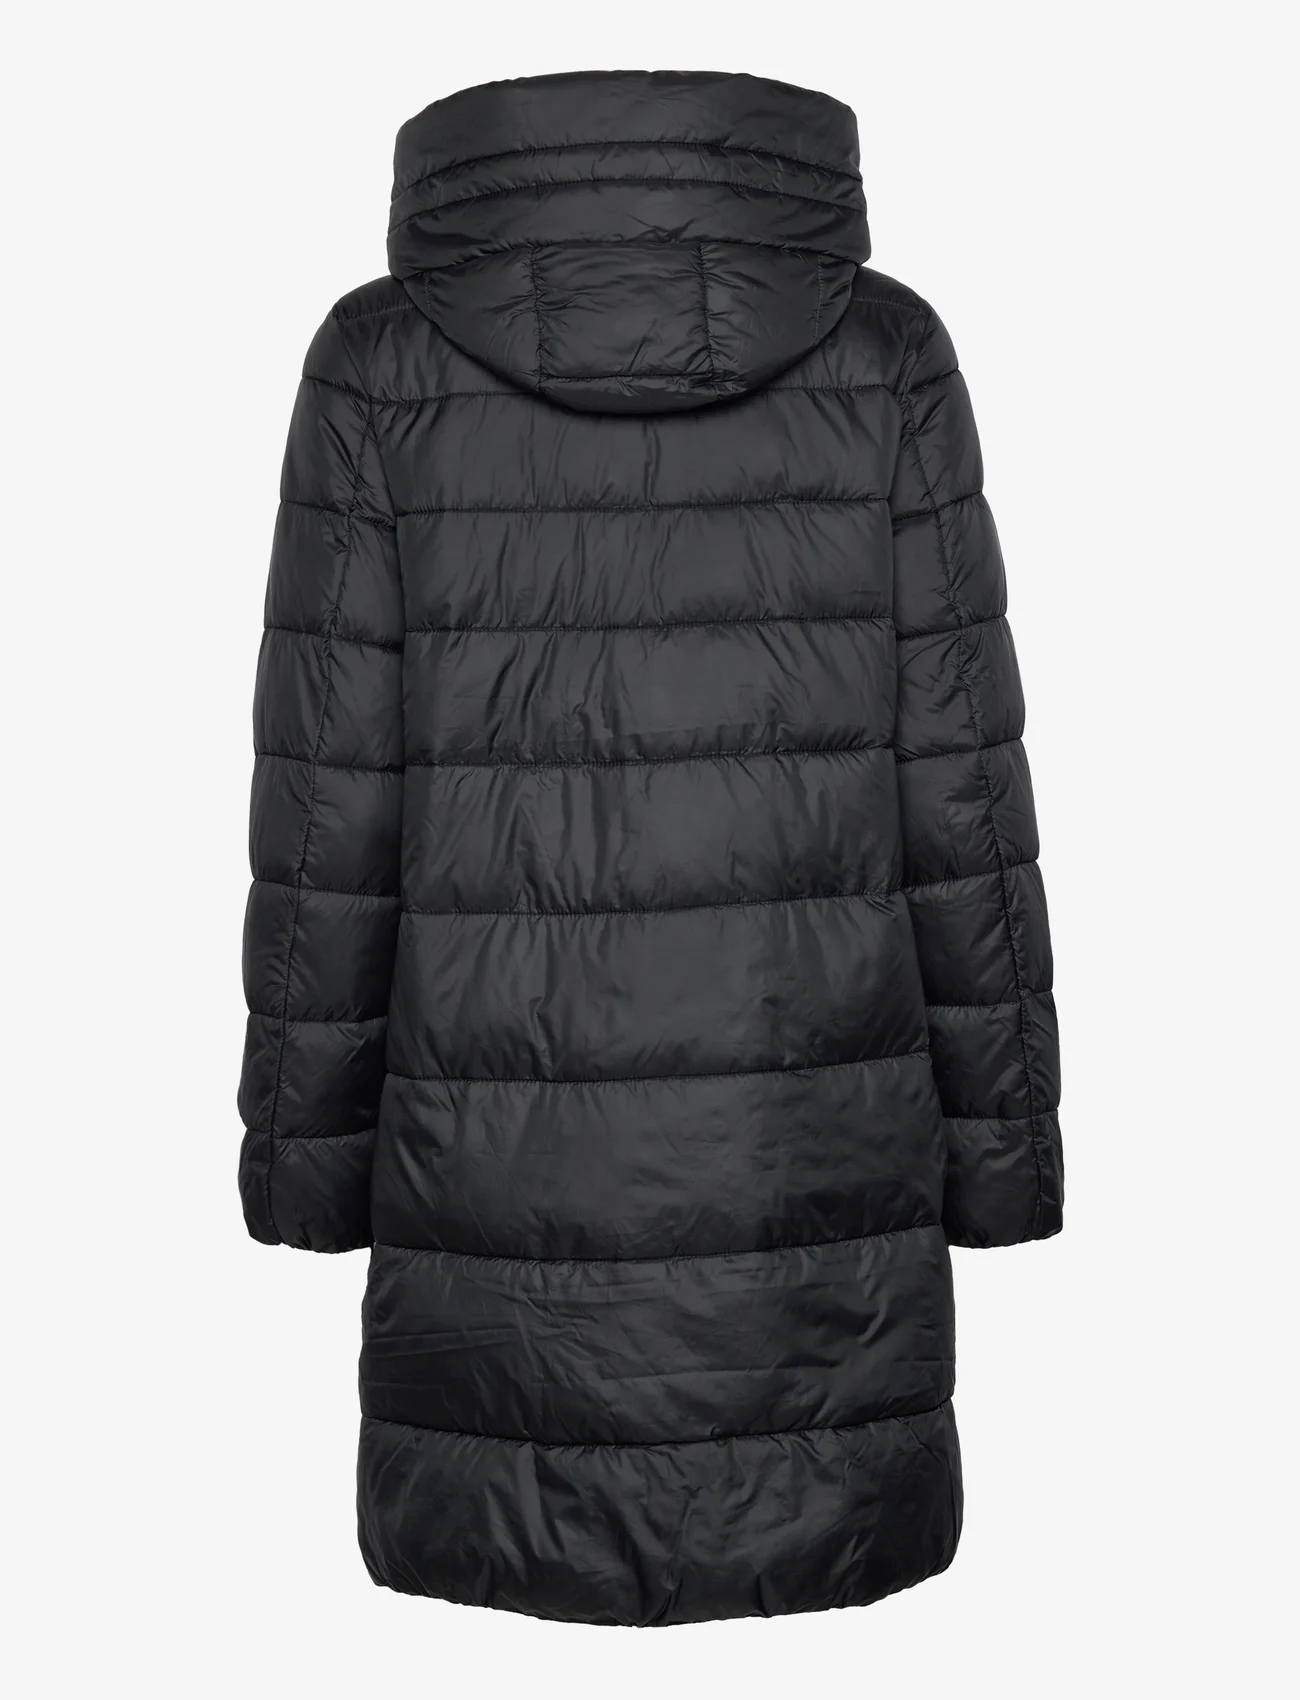 Esprit Casual - Women Coats woven regular - wintermäntel - black - 1